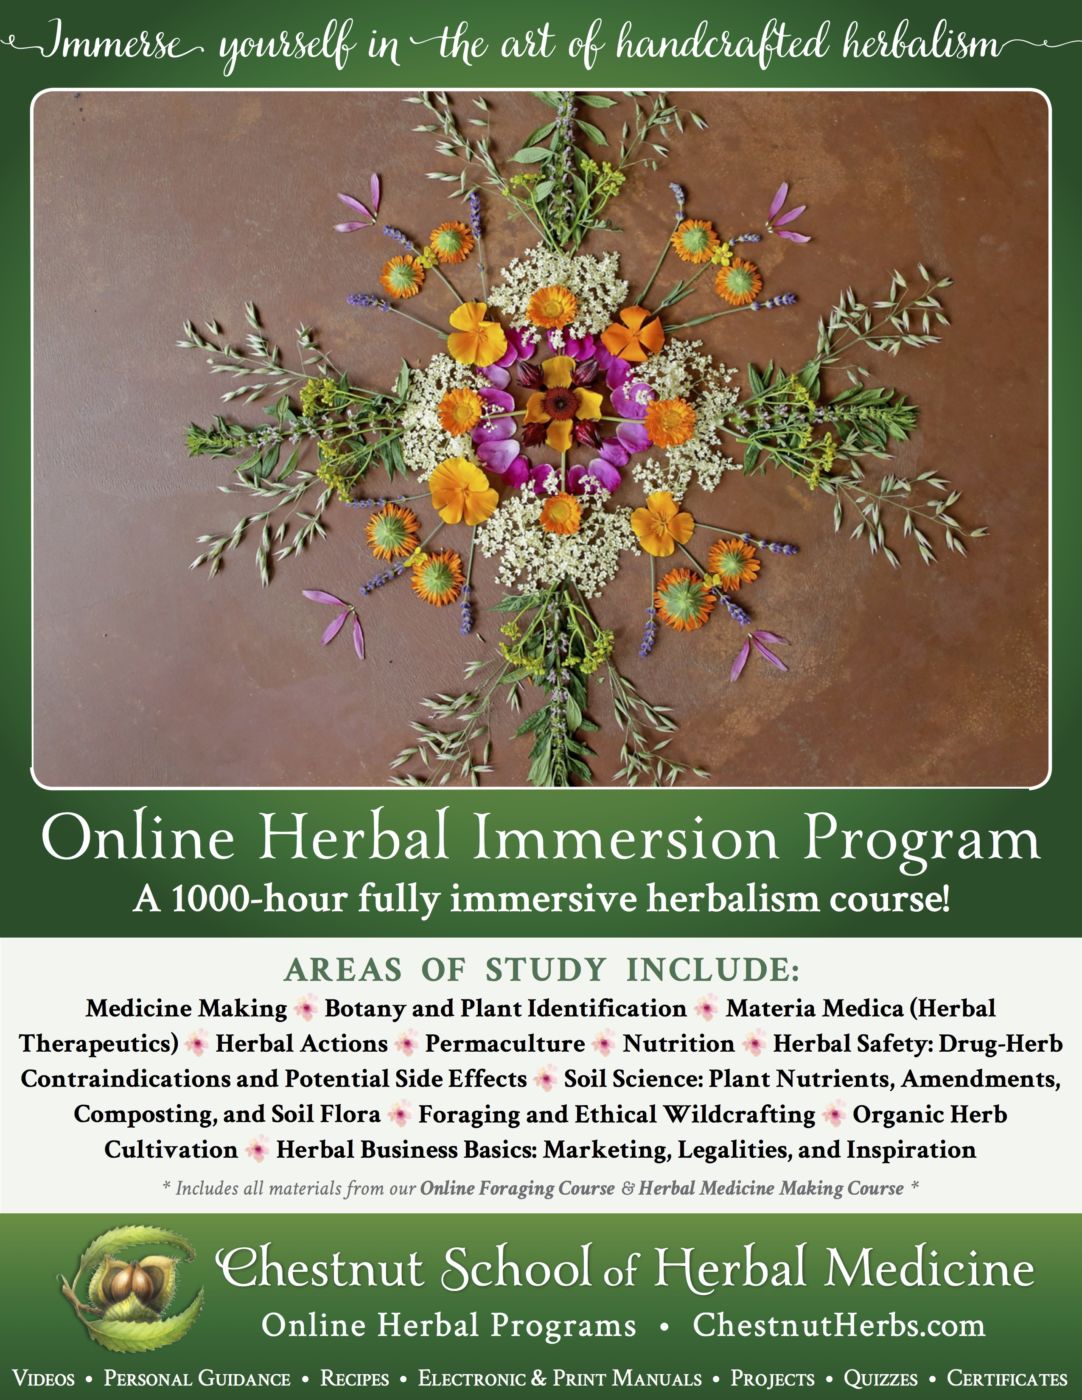 The Chestnut School of Herbal Medicine online Herbal Immersion Program.